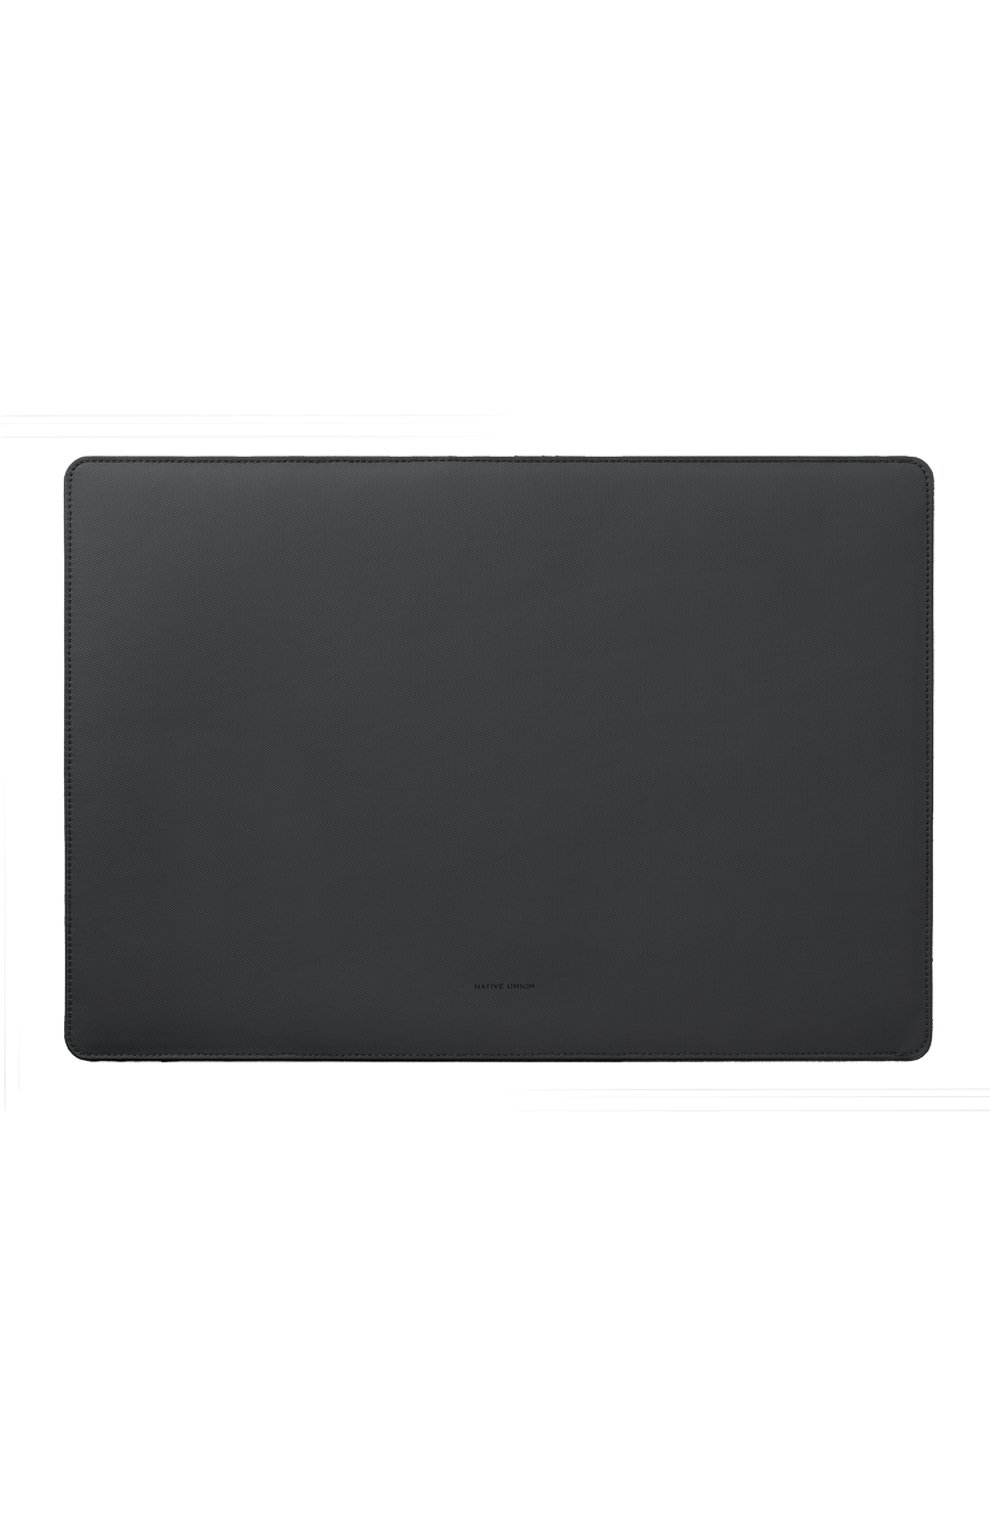 Защитный чехол stow slim sleeve для macbook 15/16 NATIVE UNION темно-серого цвета, арт. STOW-MBS-GRY-16 | Фото 2